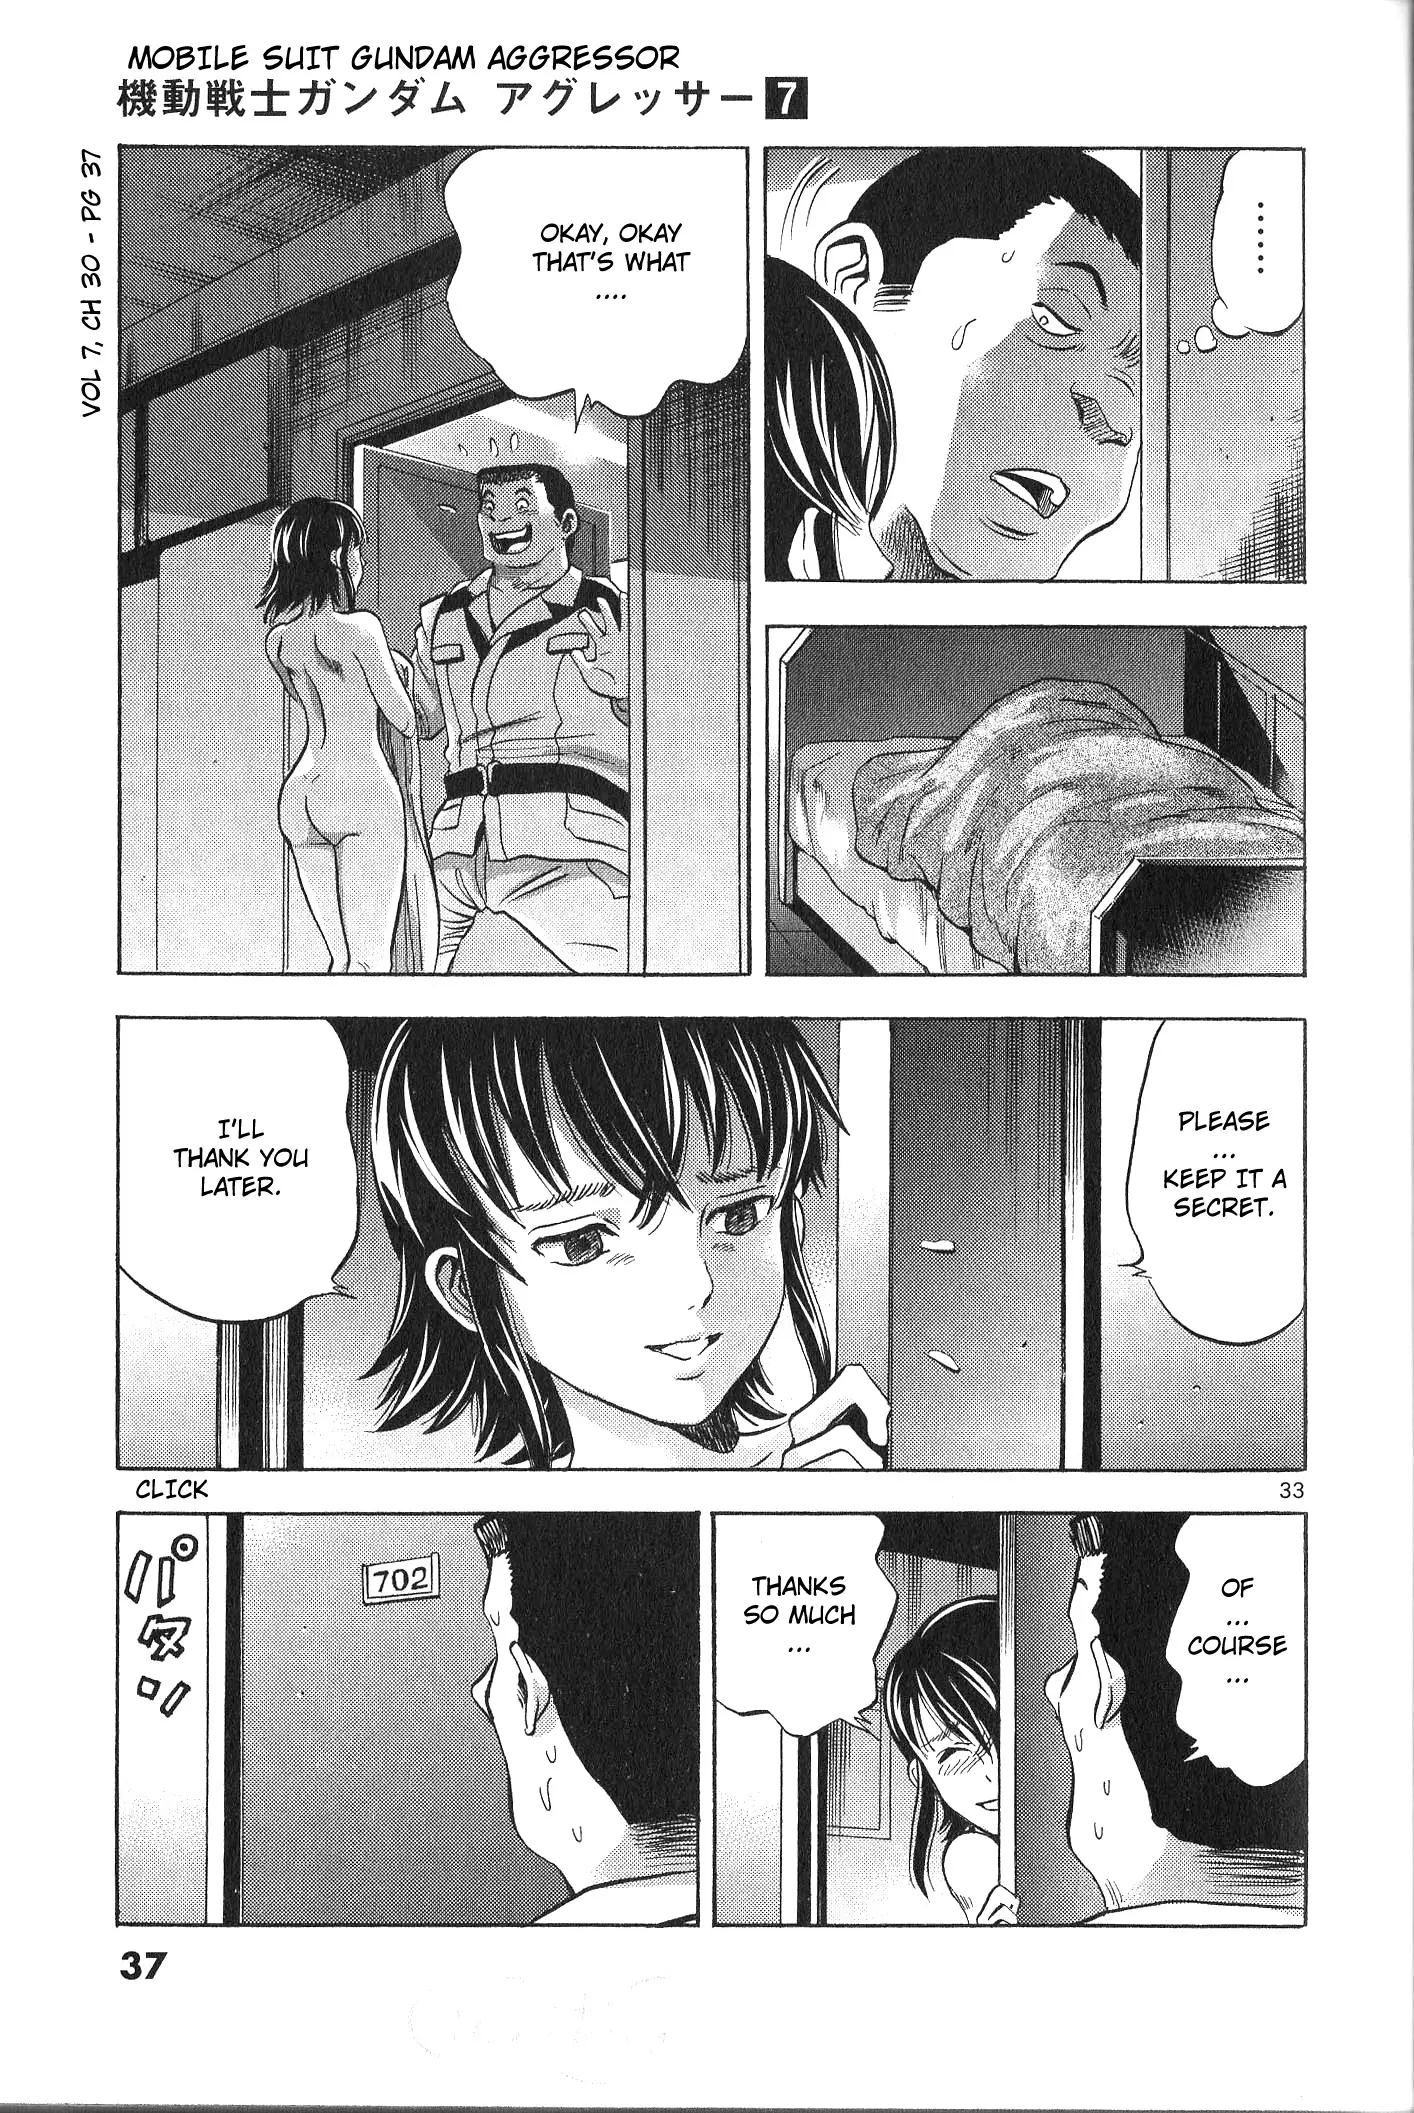 Mobile Suit Gundam Aggressor - 30 page 32-48e7d395